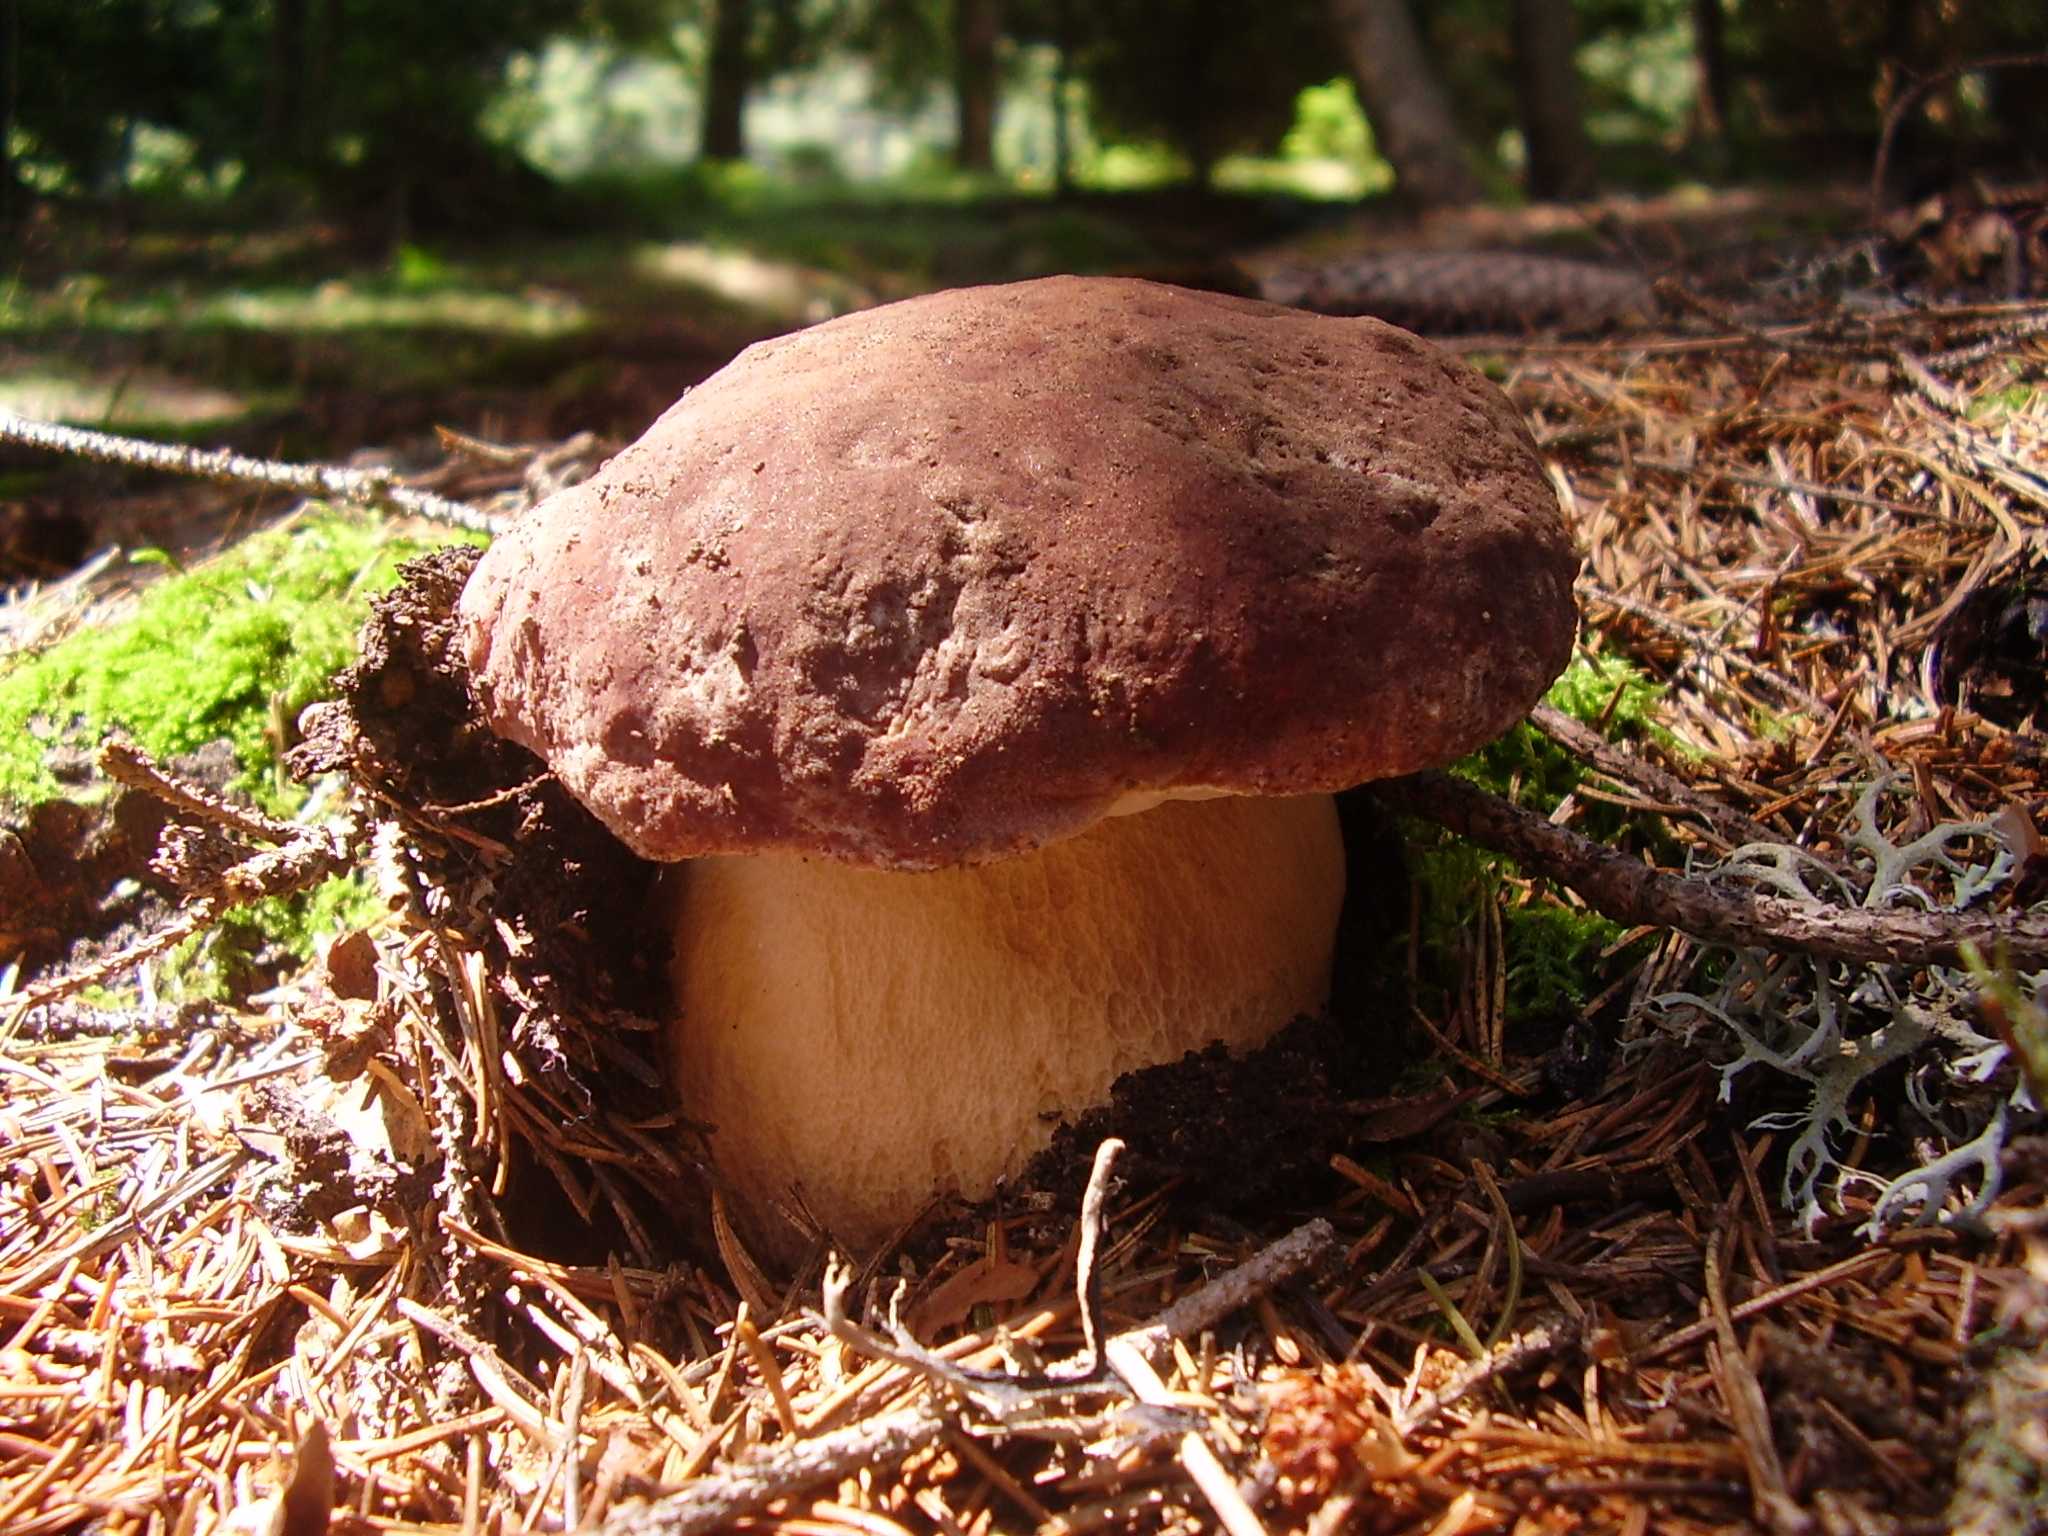 Белый гриб — места произрастания, выращивание на дому + 81 фото